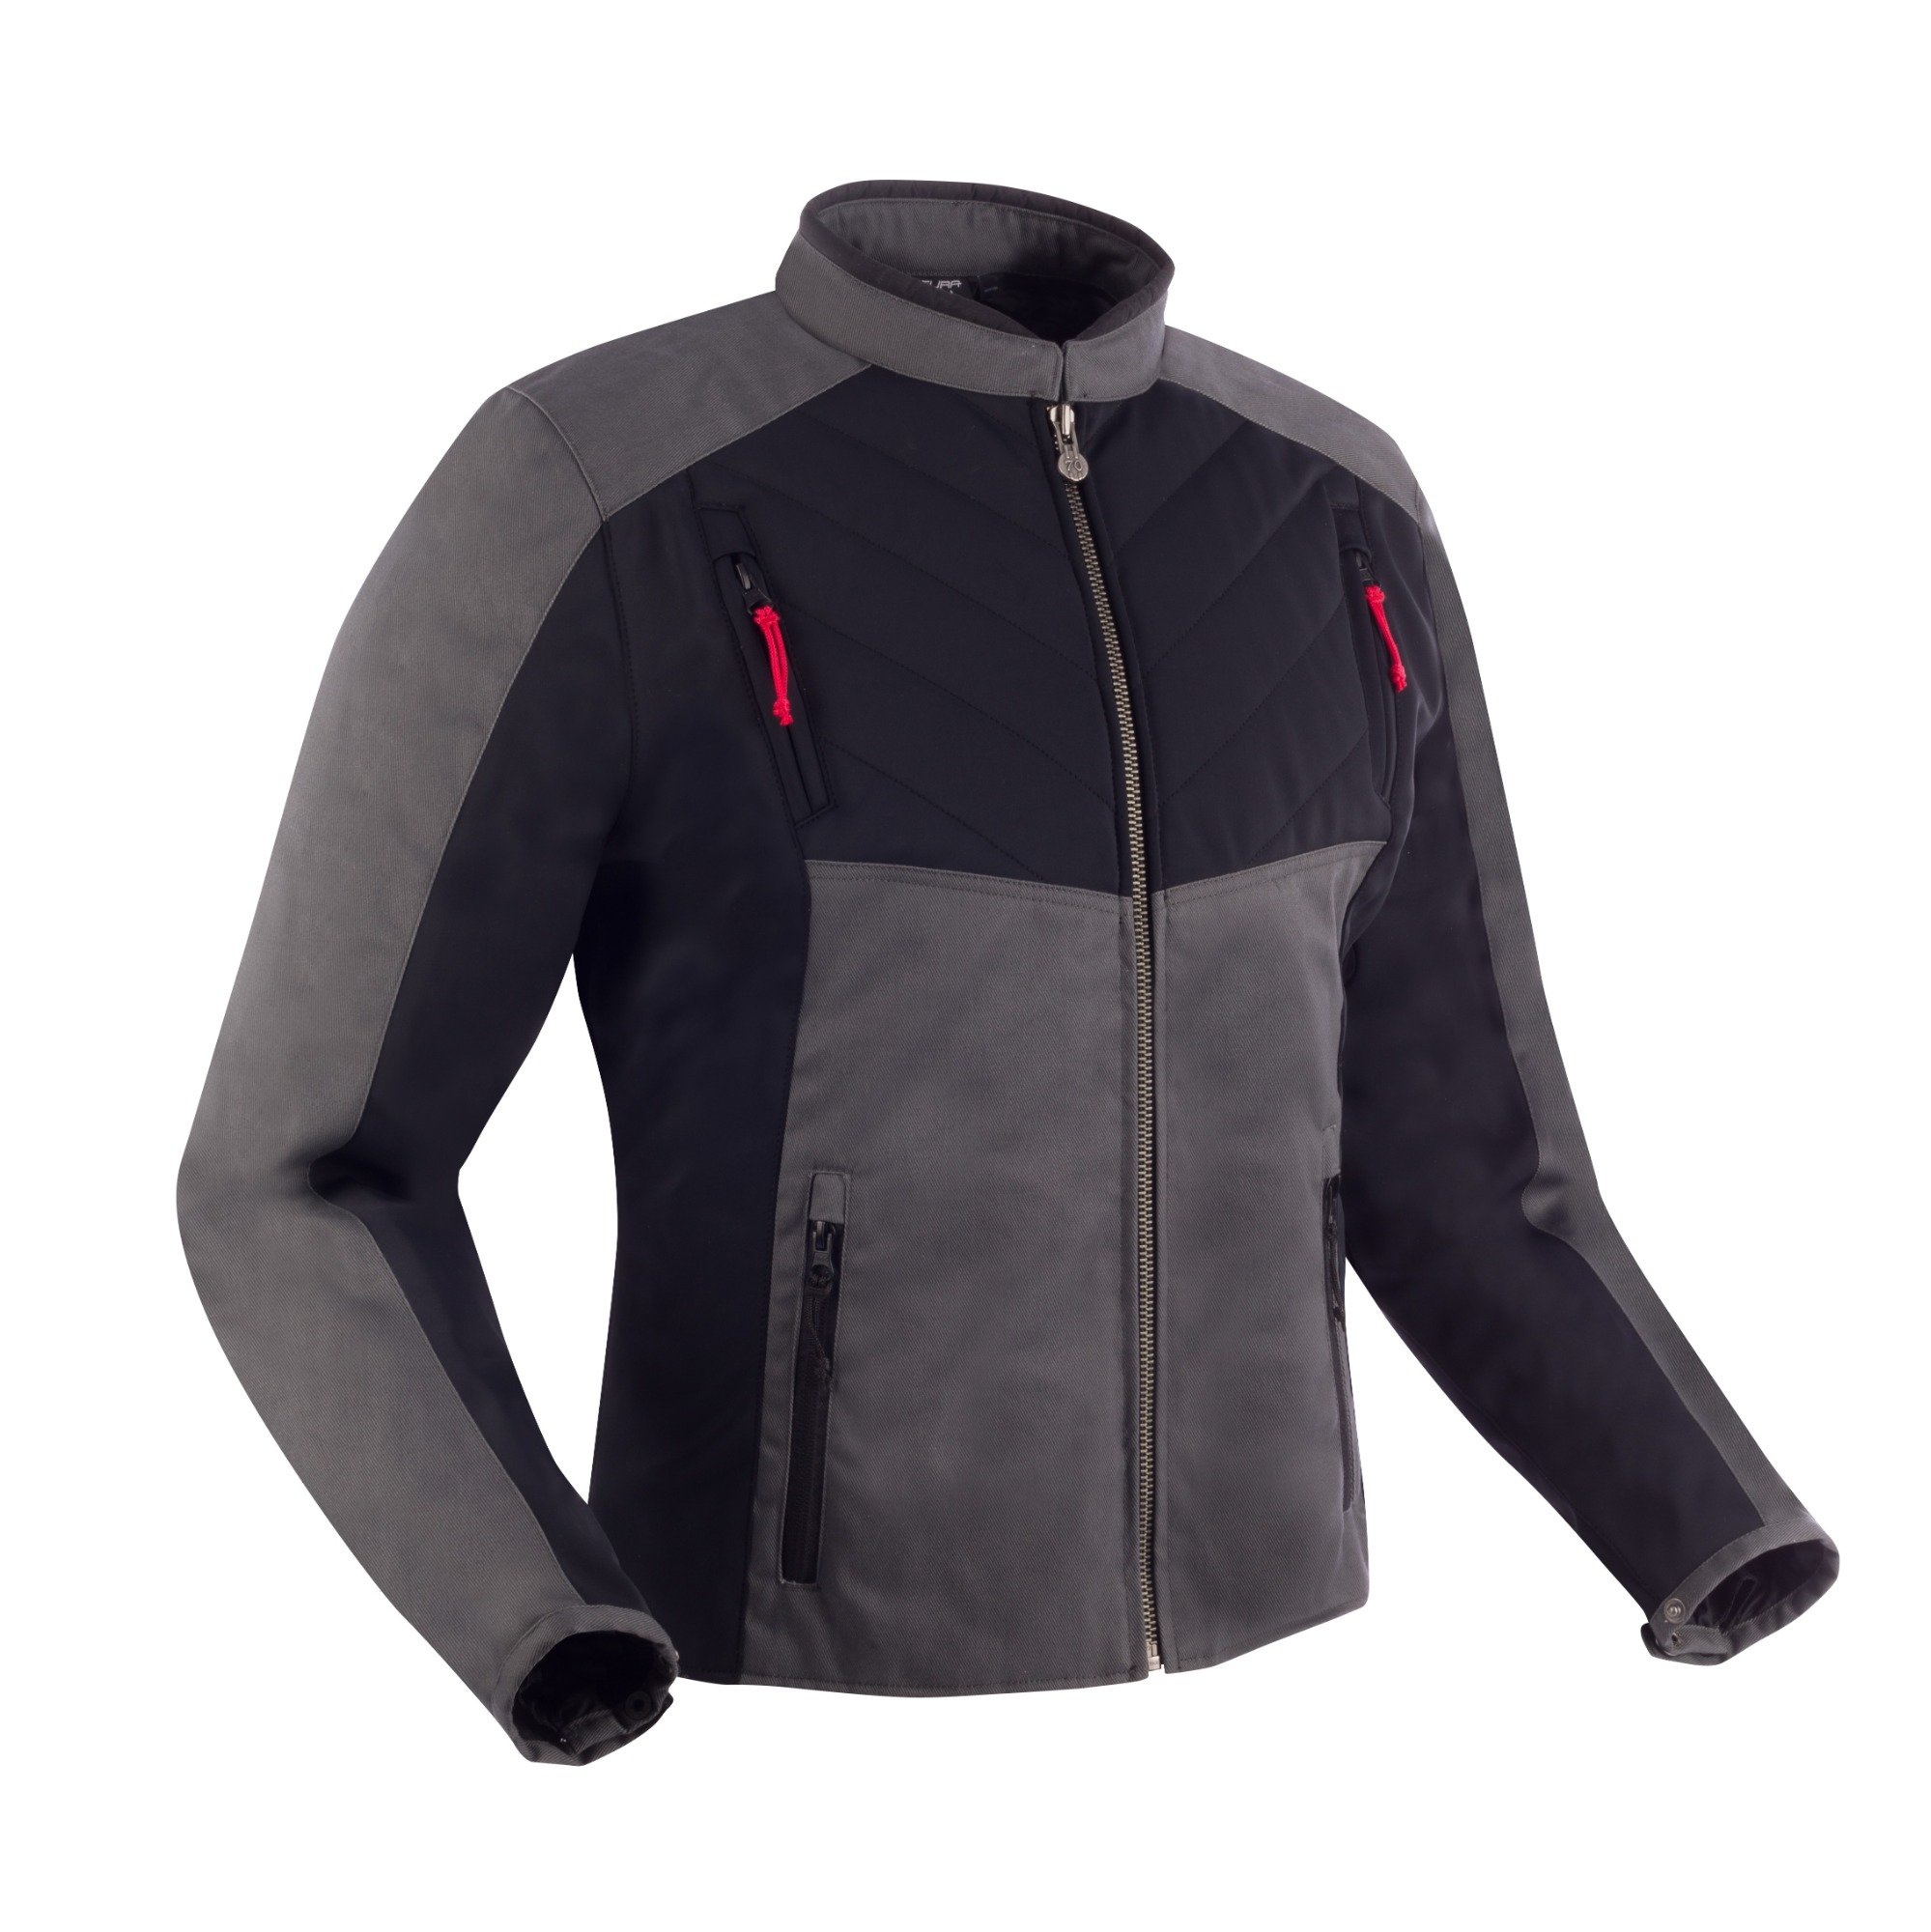 Image of Segura Volt Jacket Gray Black Size XL ID 3660815168868